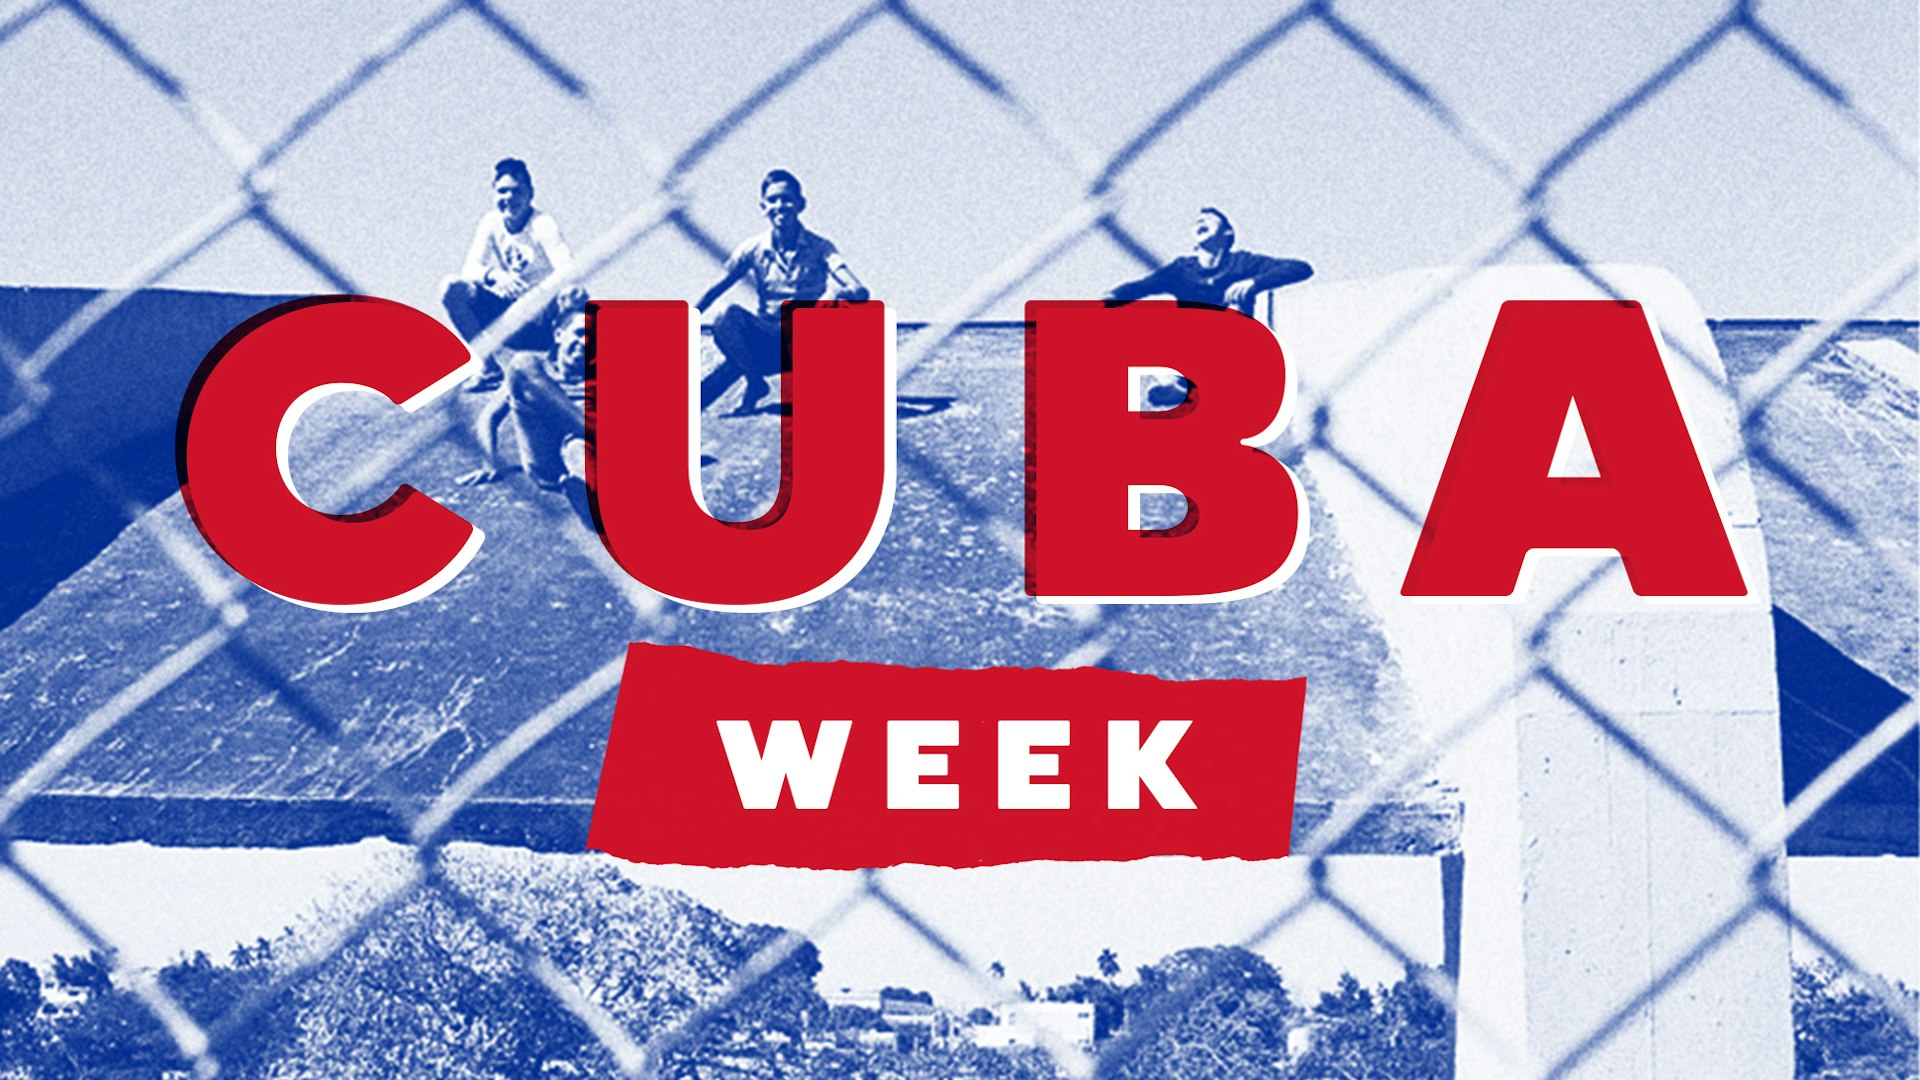 Cebe Loomis takes an analogue adventure across Cuba